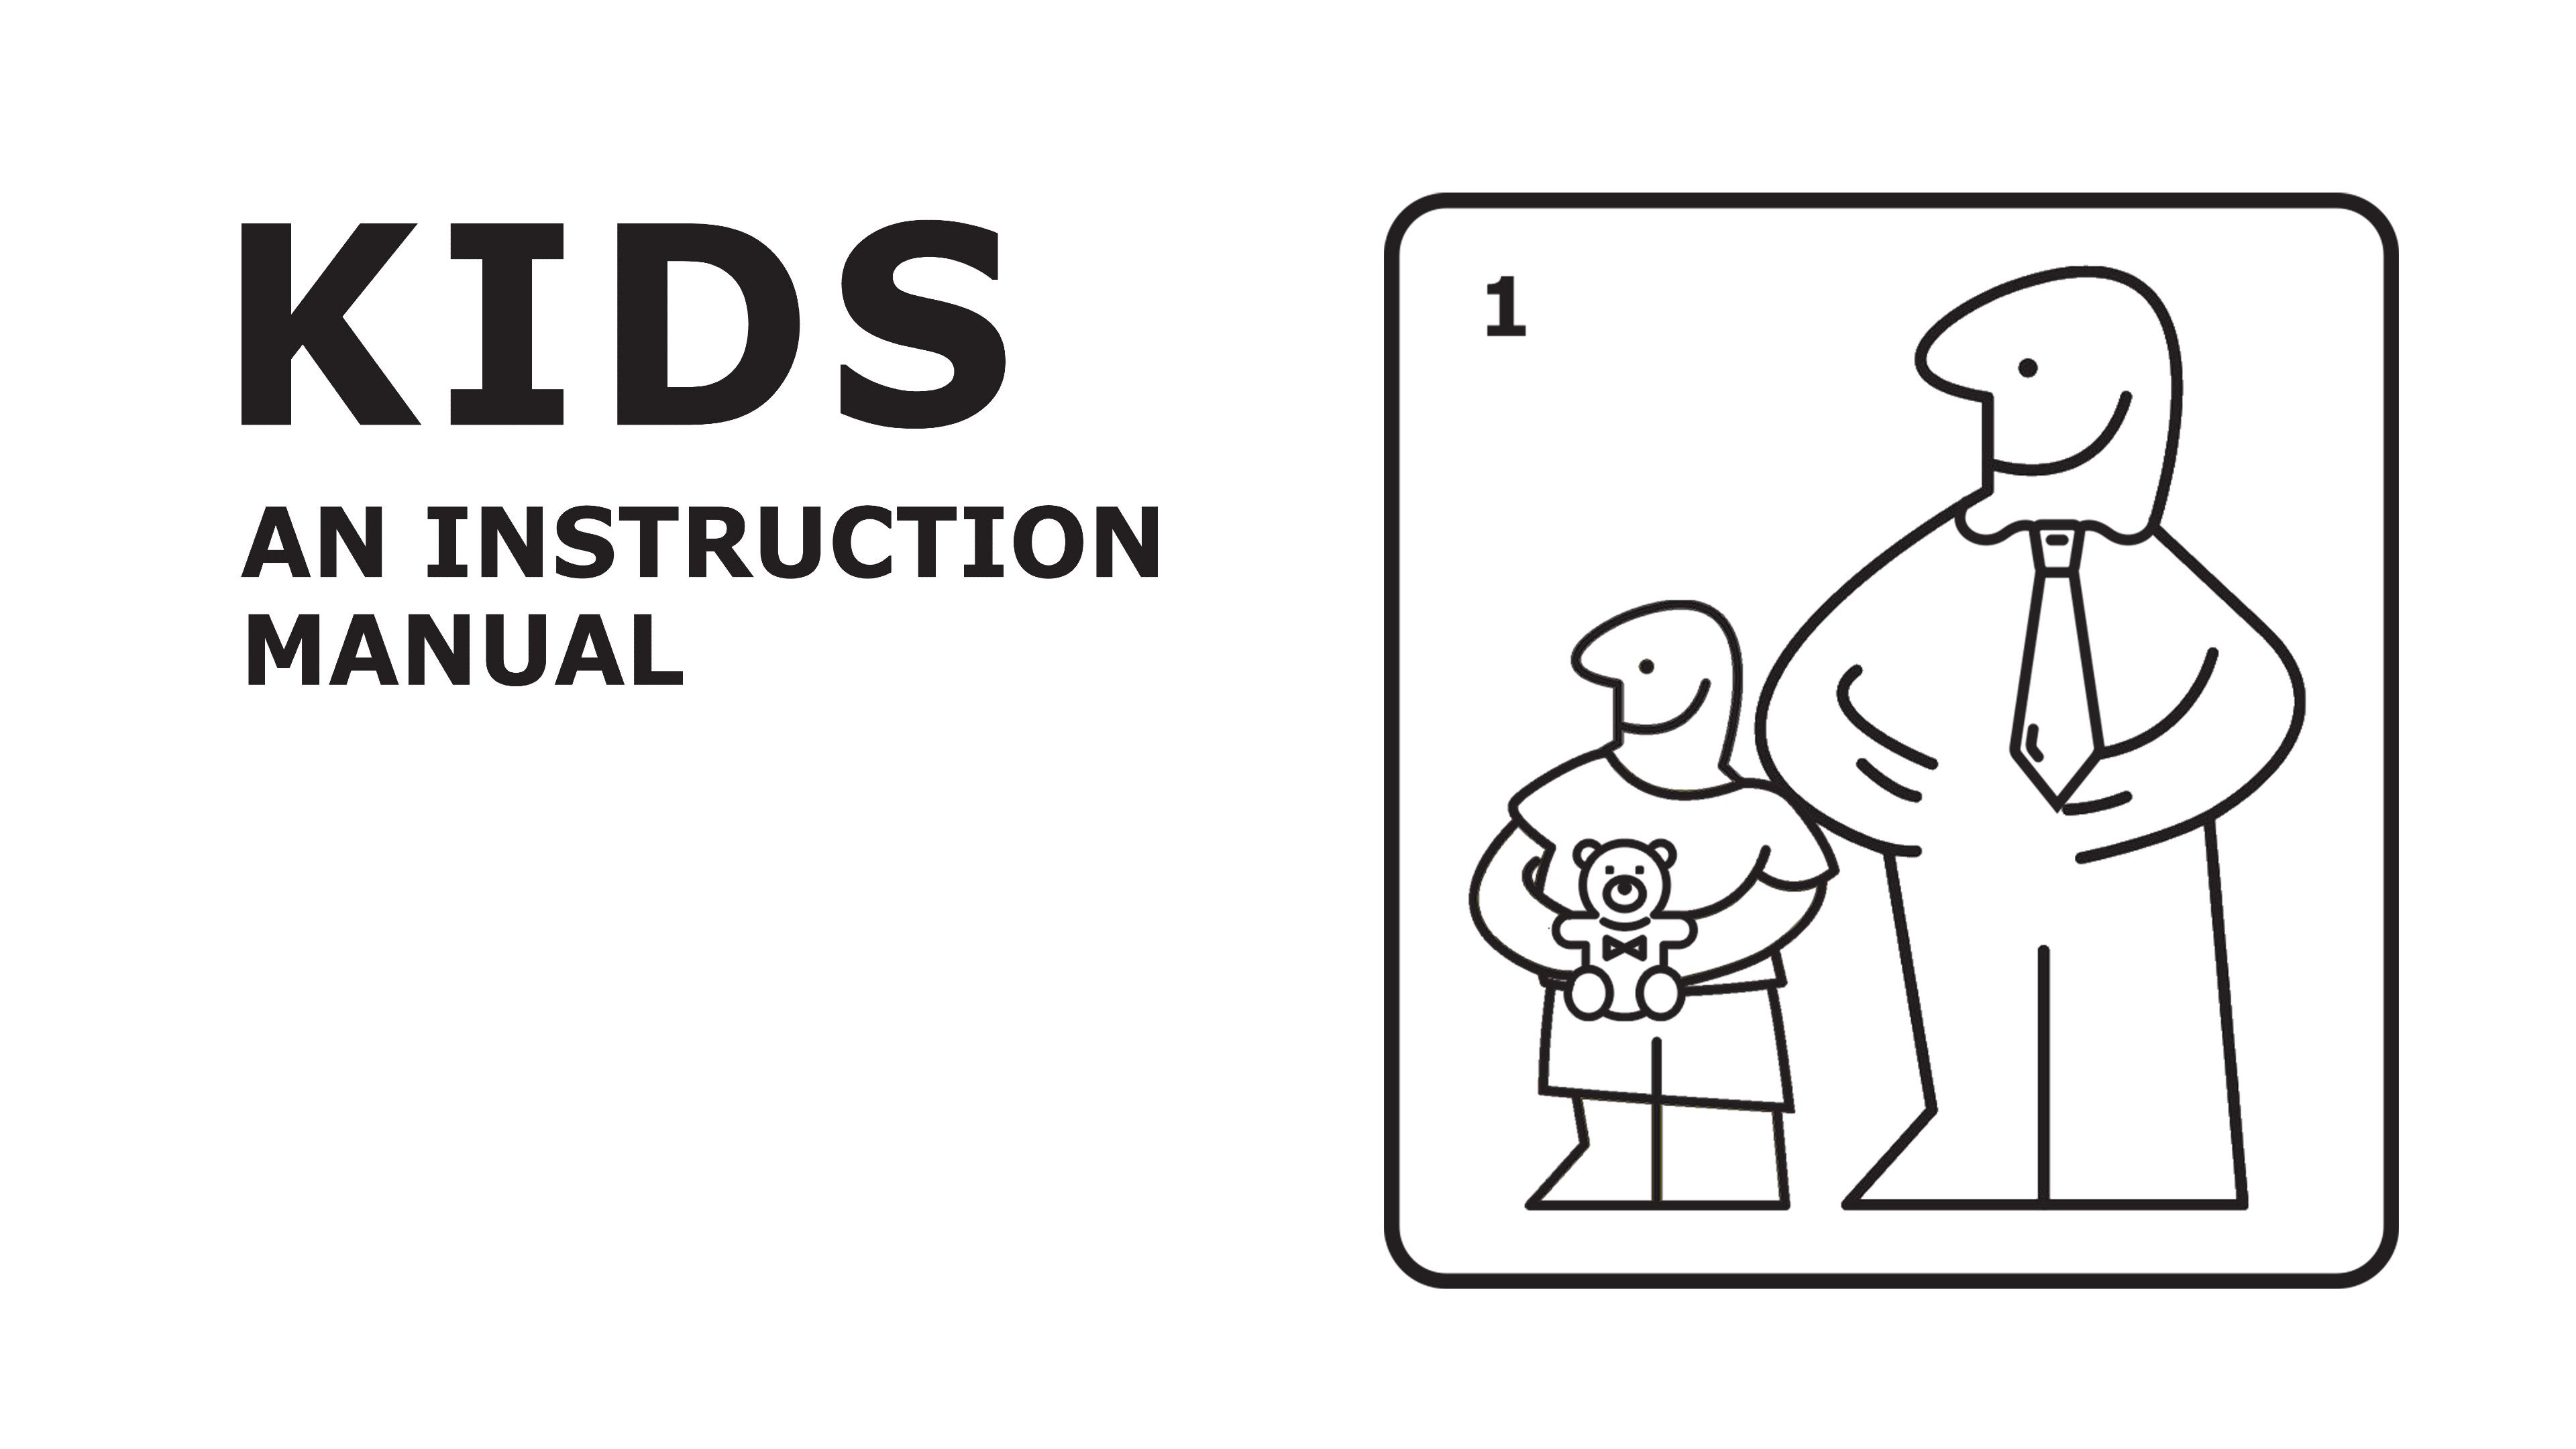 Kids: An Instruction Manual